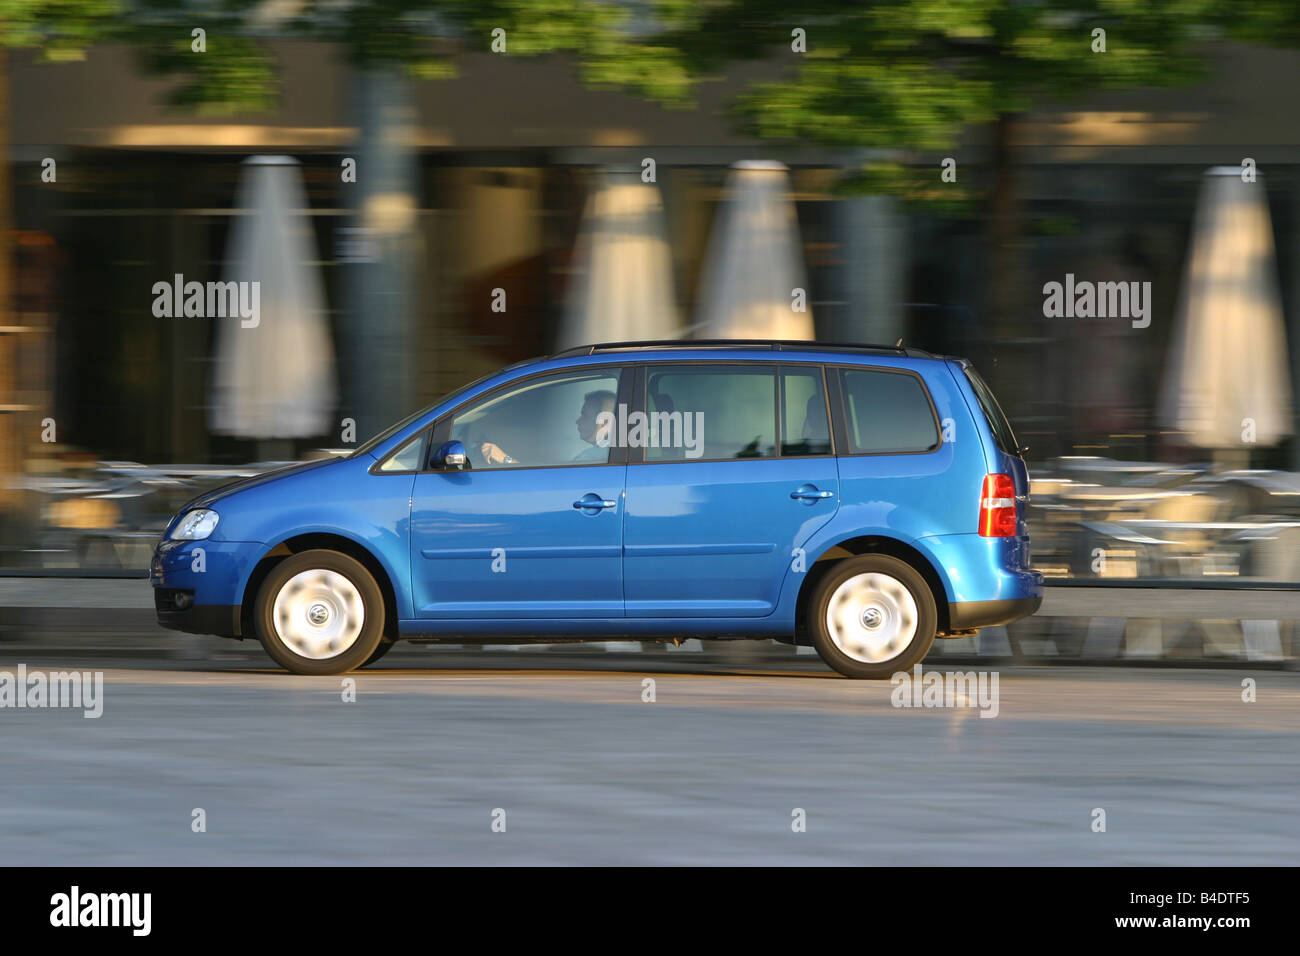 Car vw volkswagen touran van hi-res stock photography and images - Alamy